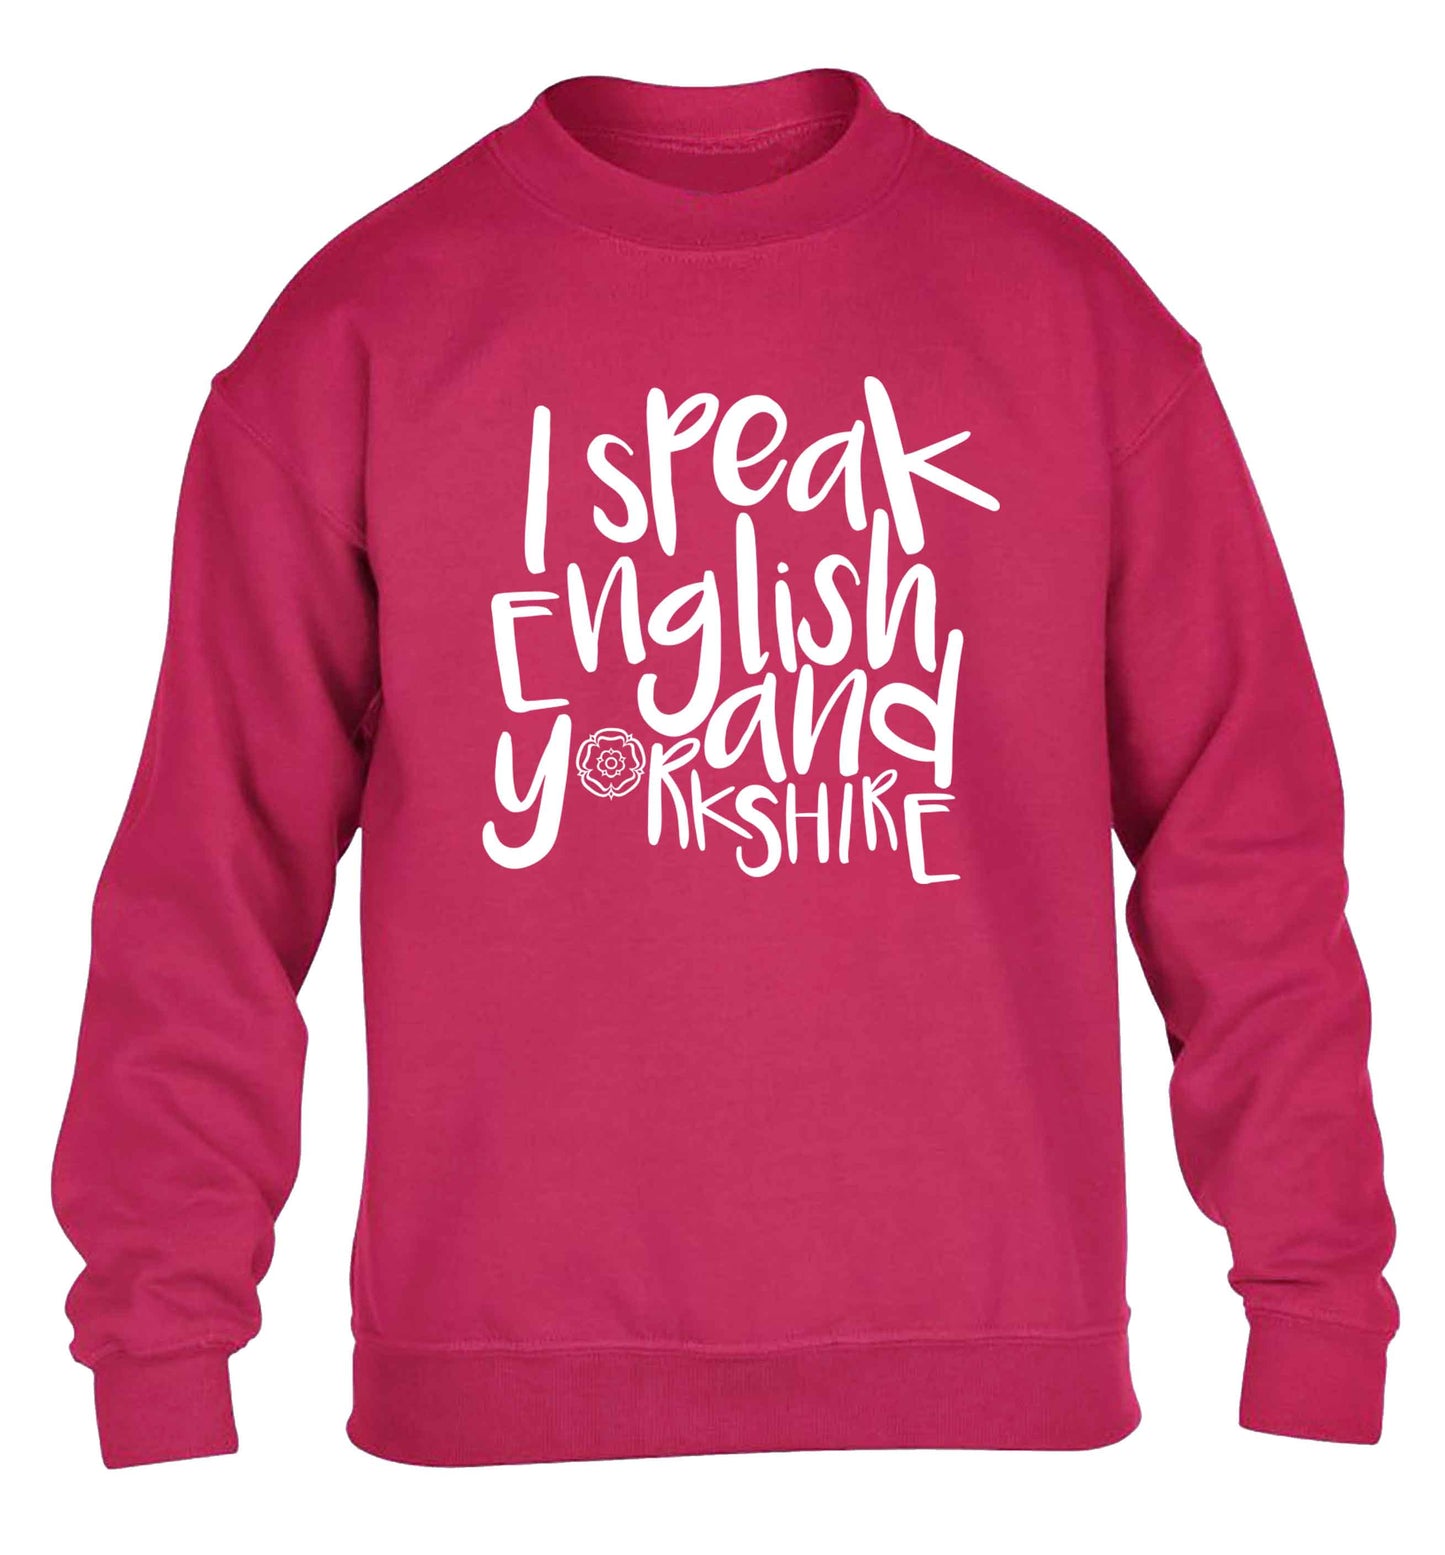 I speak English and Yorkshire children's pink sweater 12-13 Years